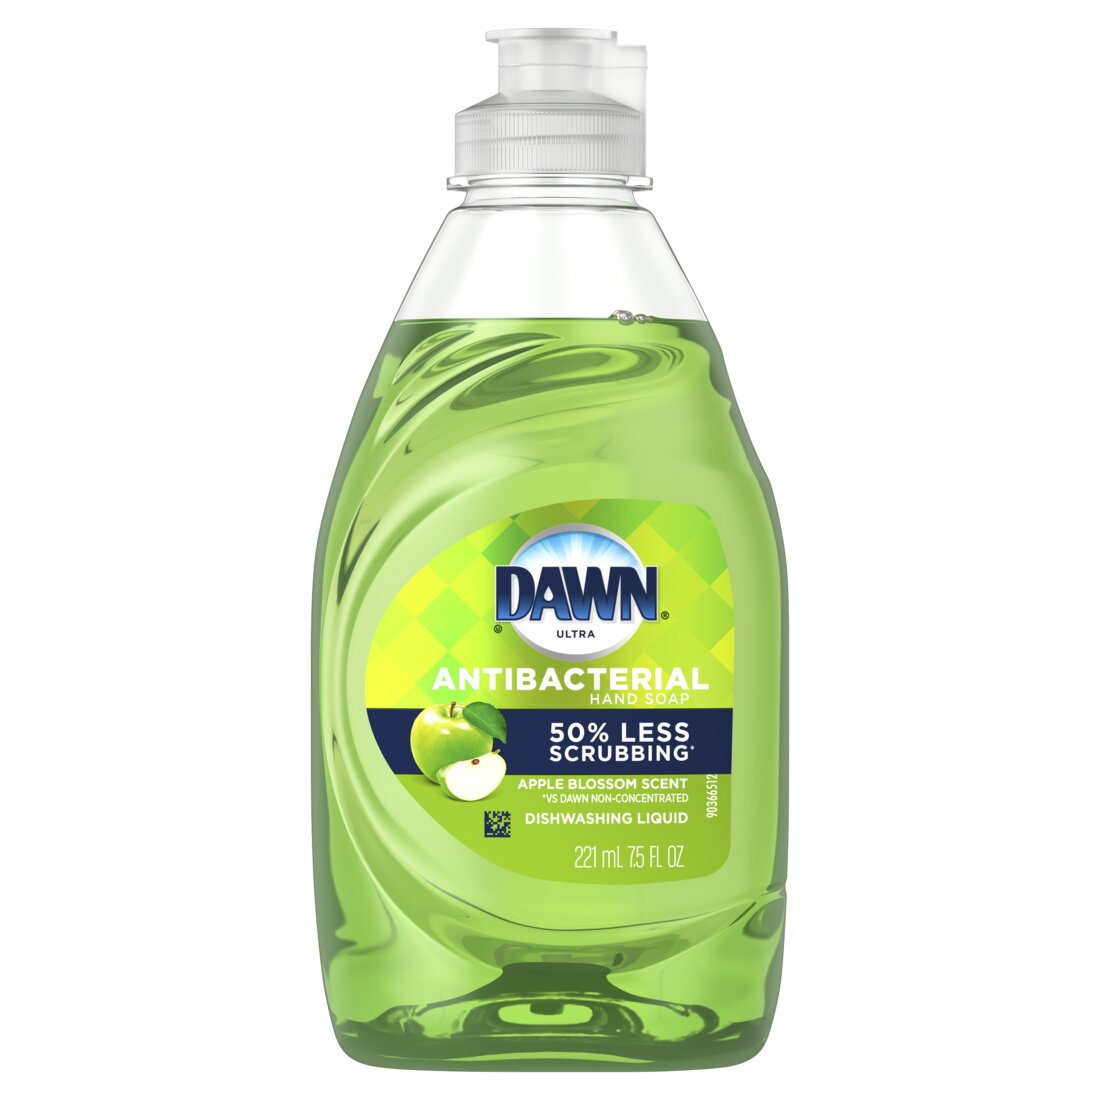 Dawn Ultra Antibacterial Dishwashing Liquid Dish Soap Apple Blossom Scent - 7.5oz/18pk